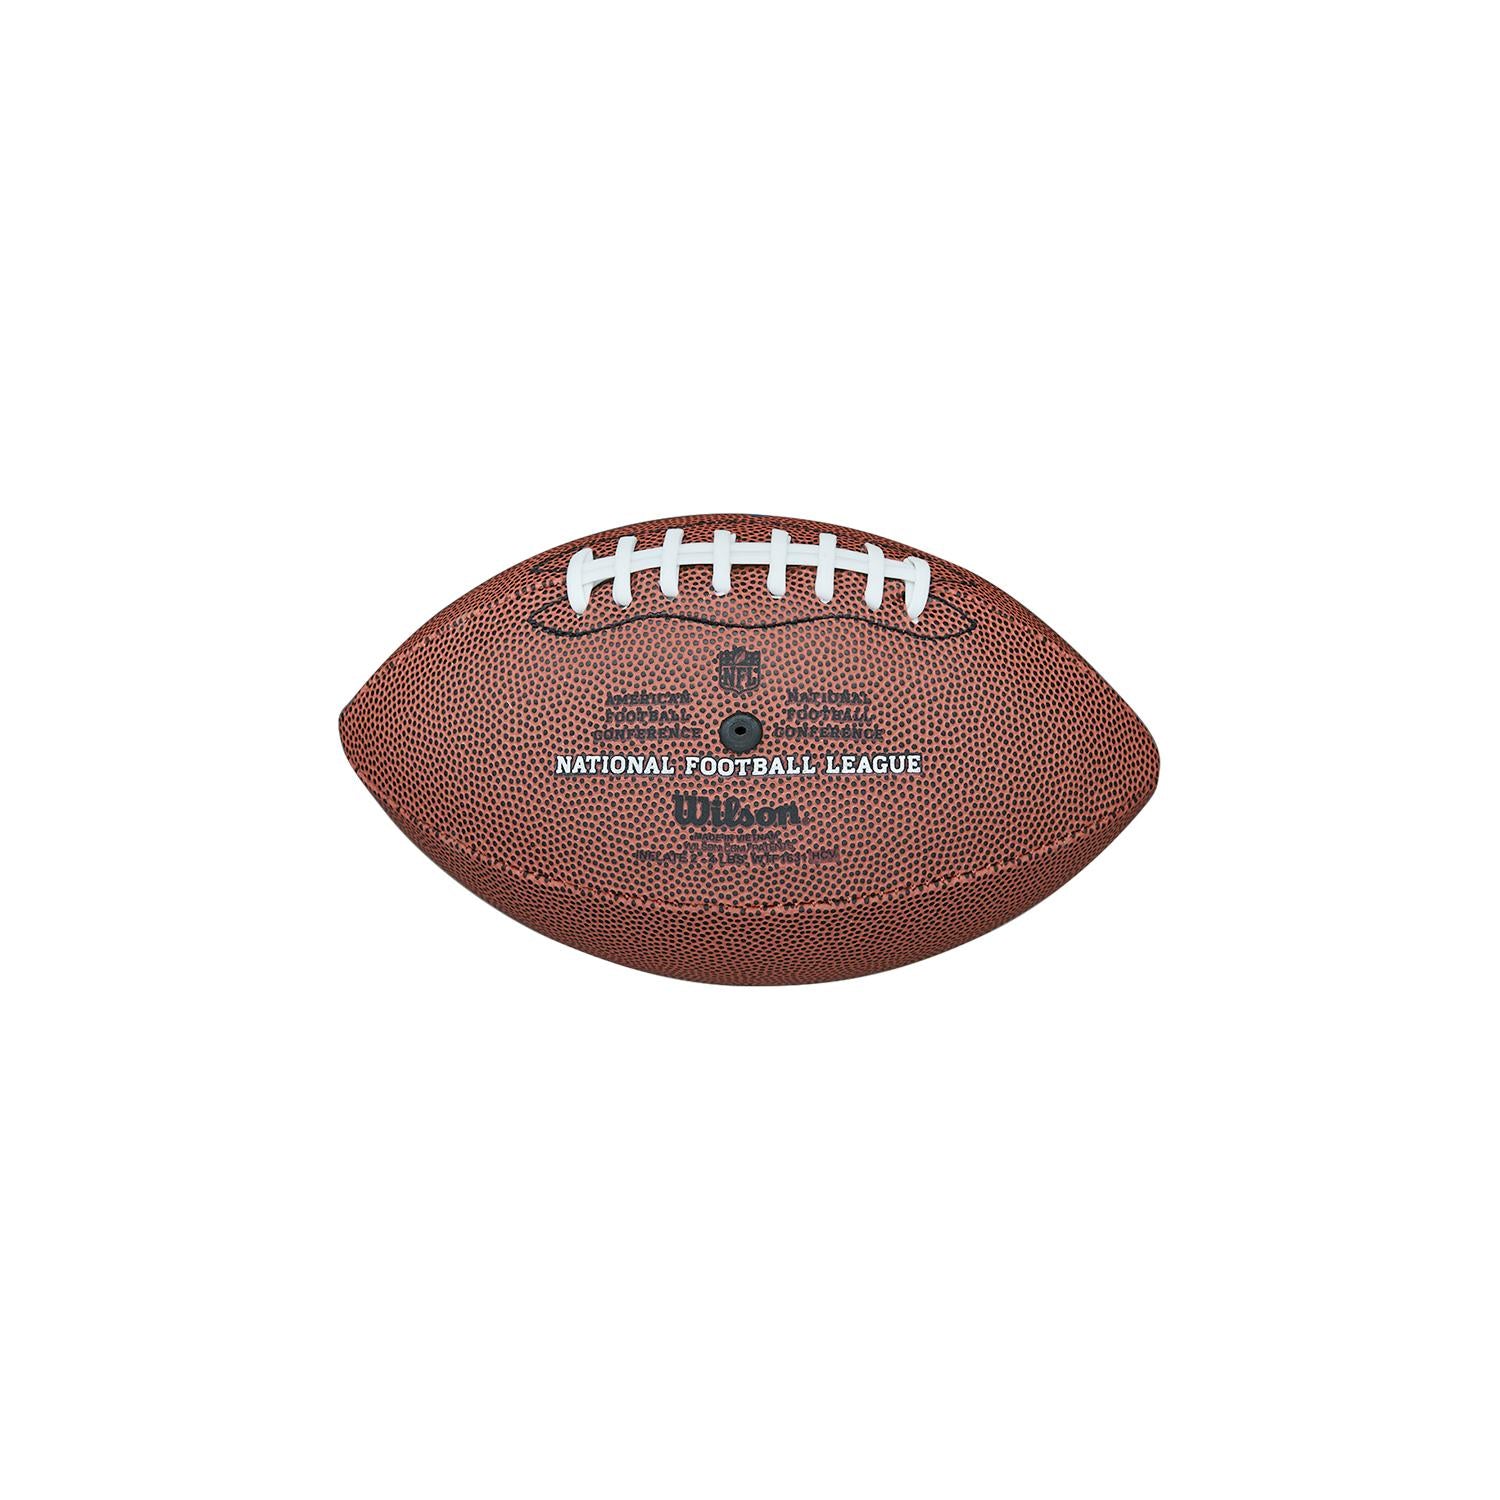 Balón NFL The Duke Réplica Mini